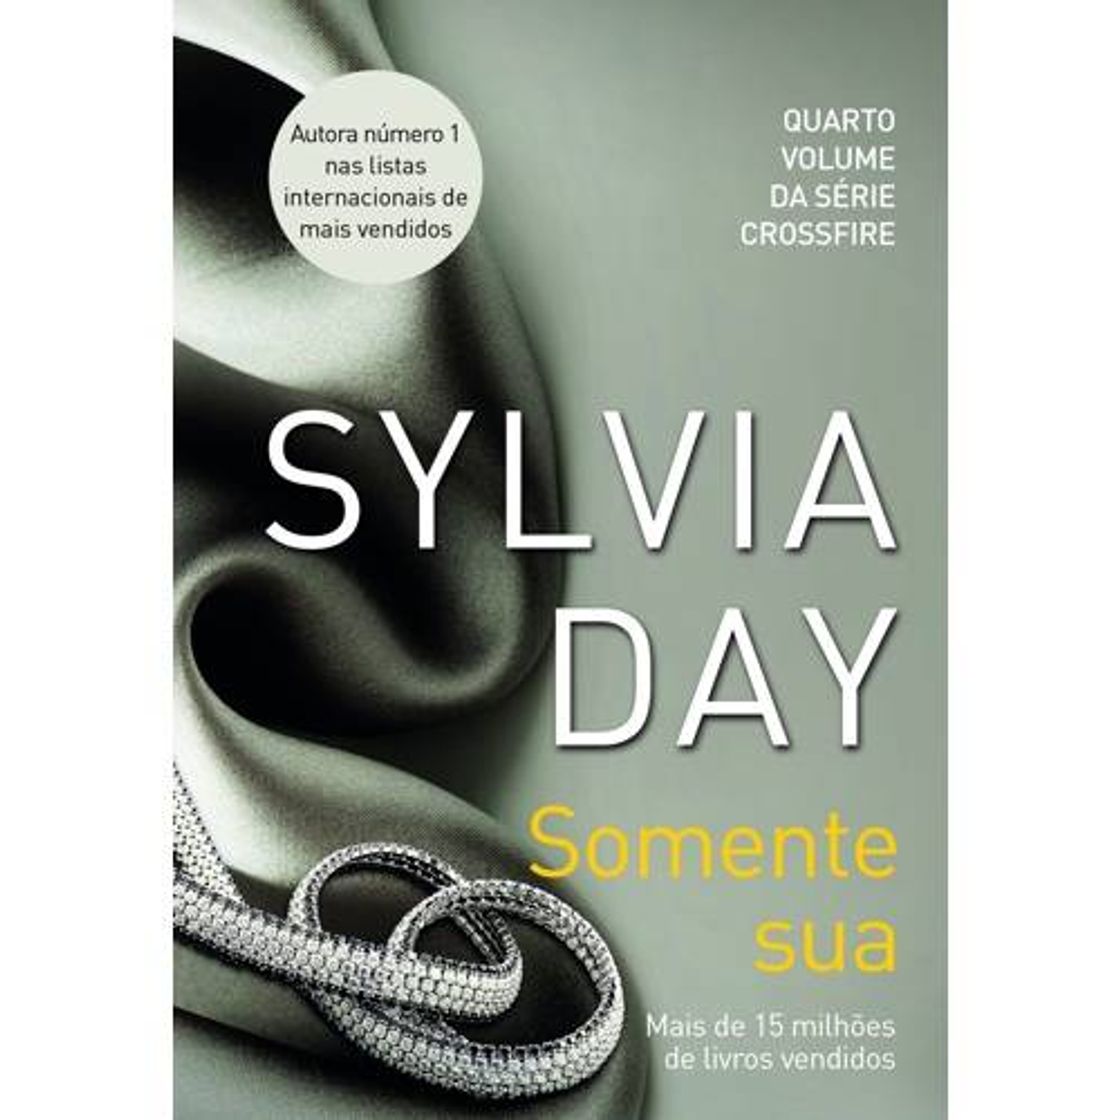 Somente sua(Sylvia Day ) 4 volume